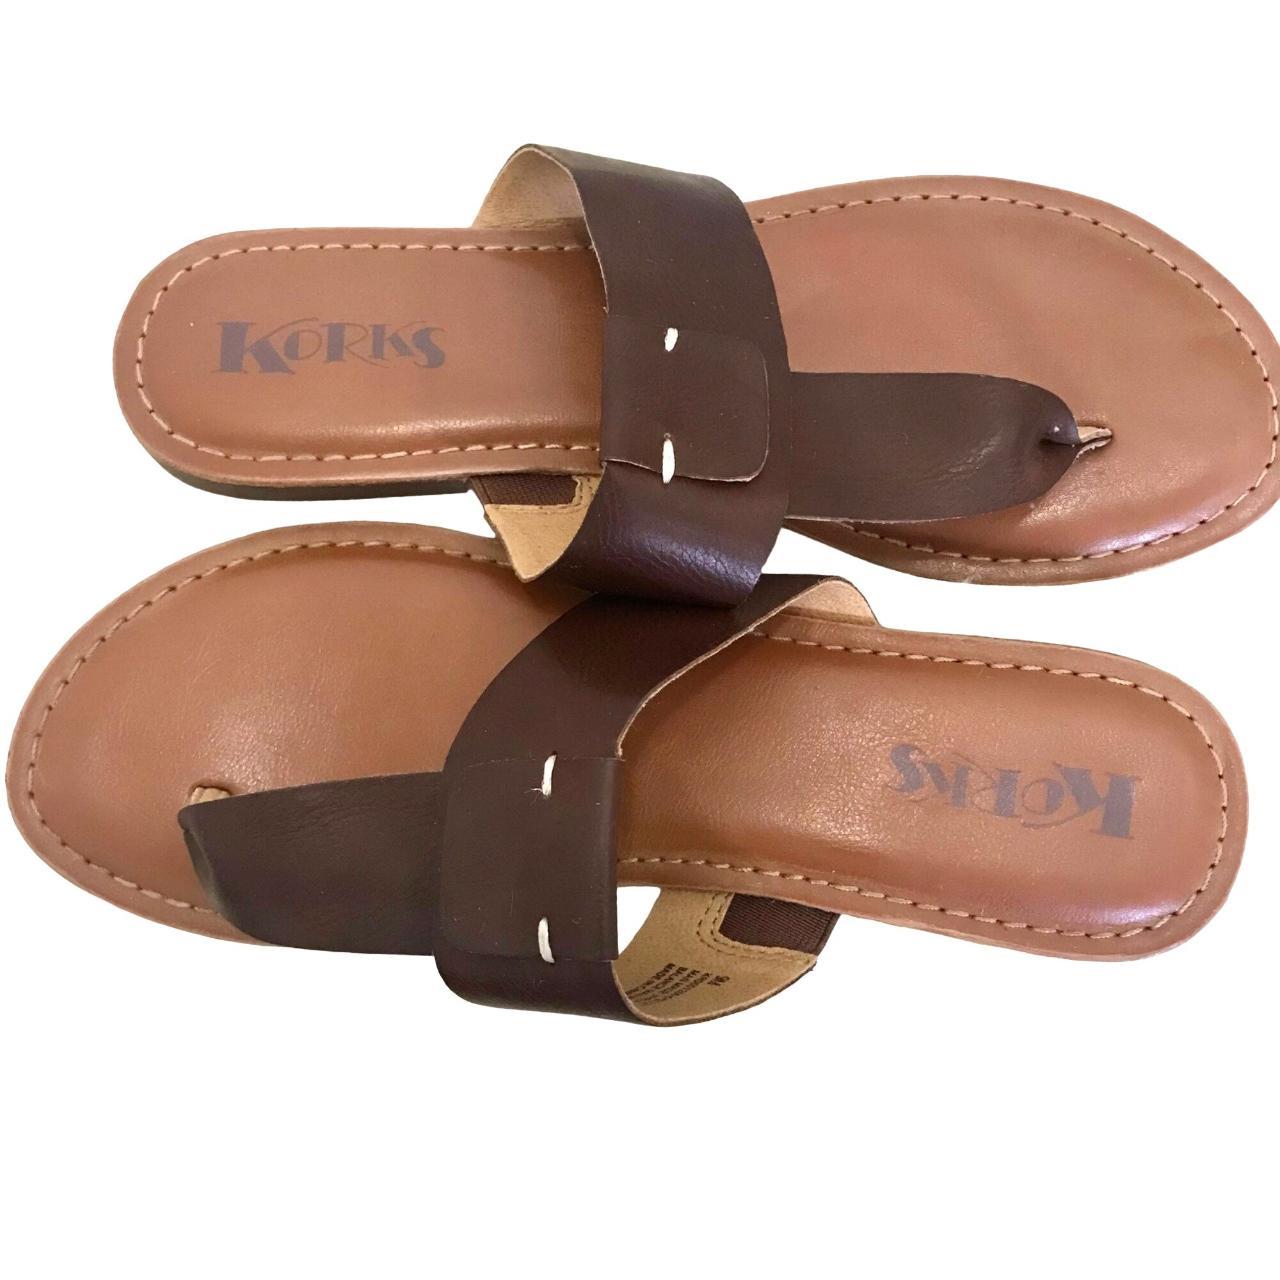 Korks Women's Brown Sandals